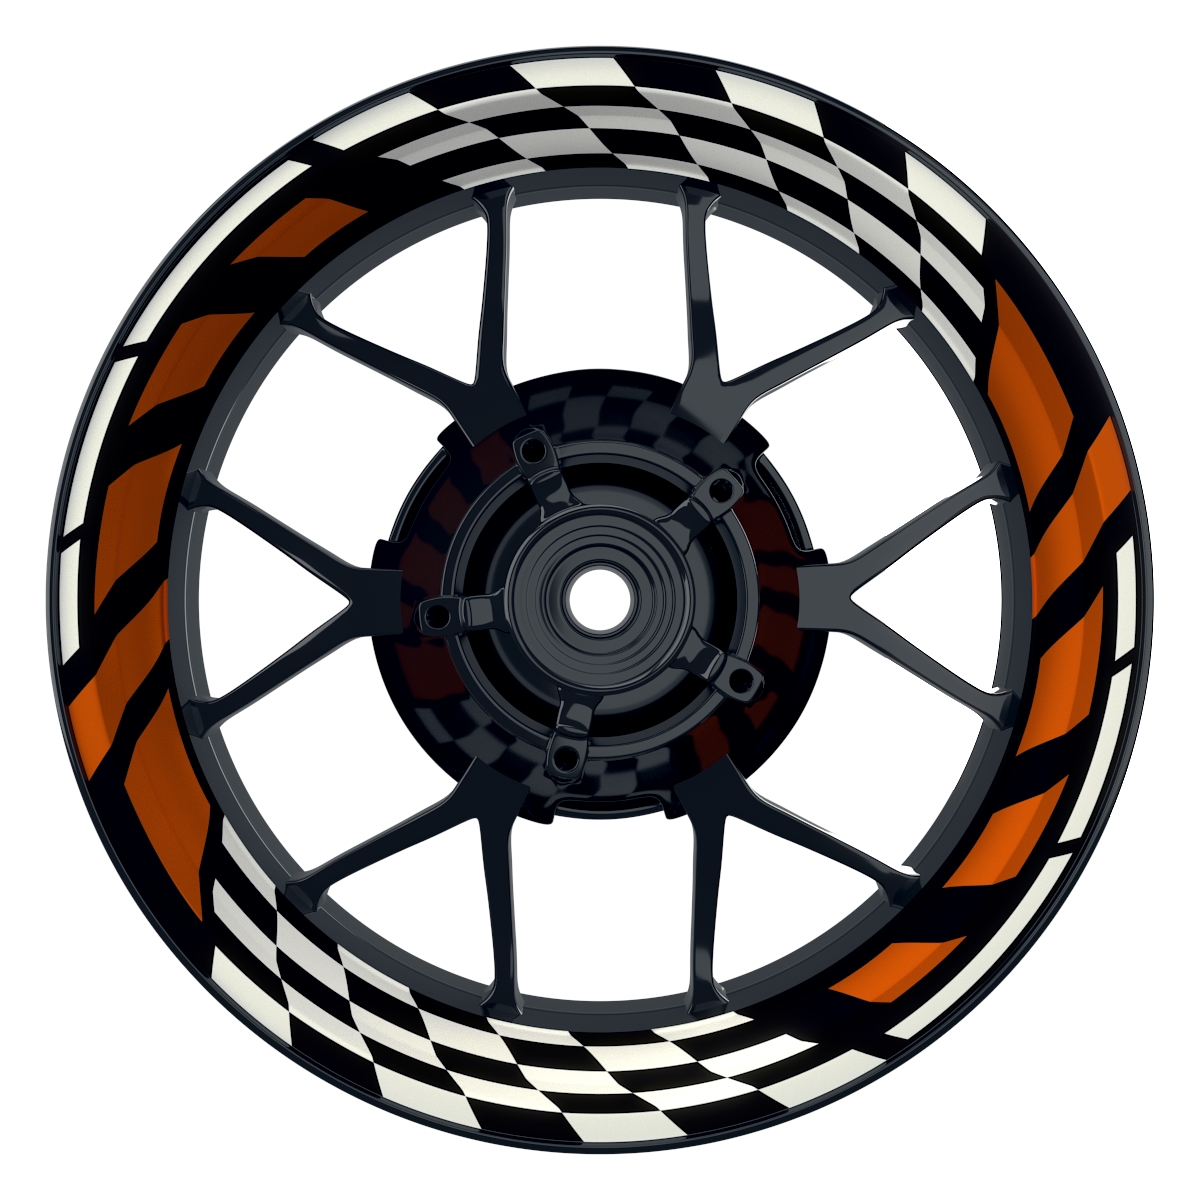 RACE schwarz orange Wheelsticker Felgenaufkleber